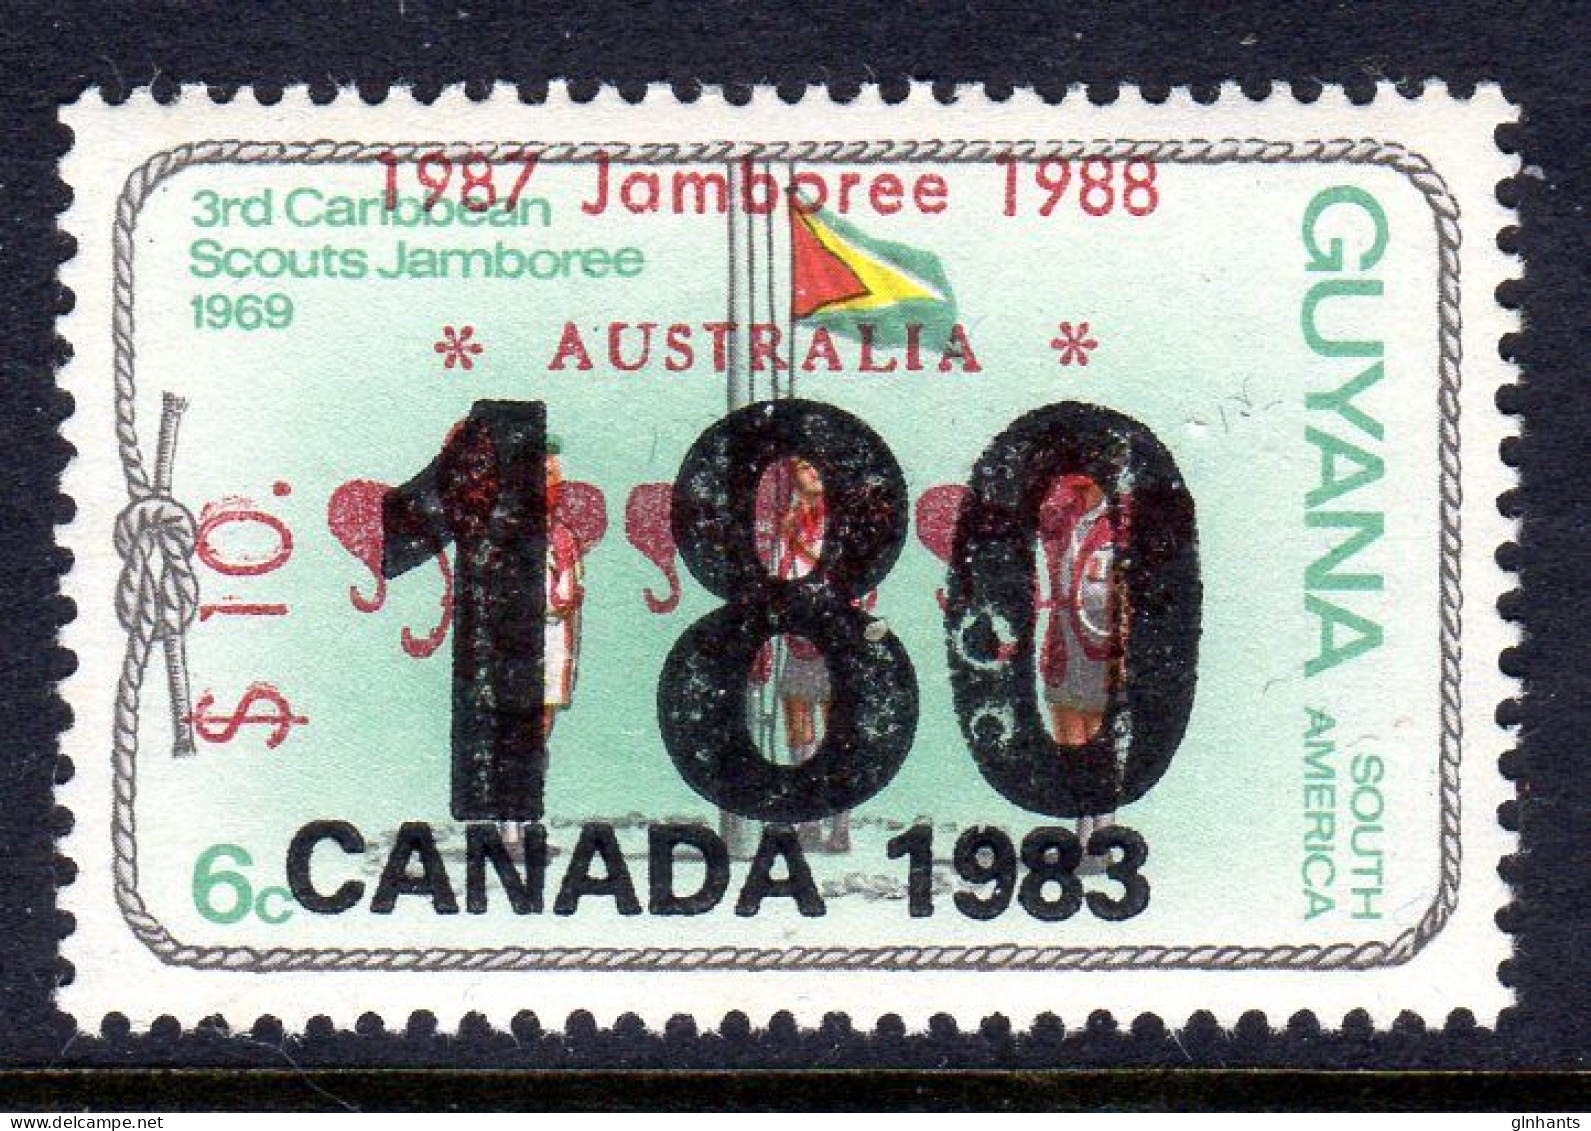 GUYANA - 1988 $10 ON 180 ON CANADA 1983 AUSTRALIA JAMBOREE OVERPRINT FINE MNH ** SG 2268 - Guyane (1966-...)